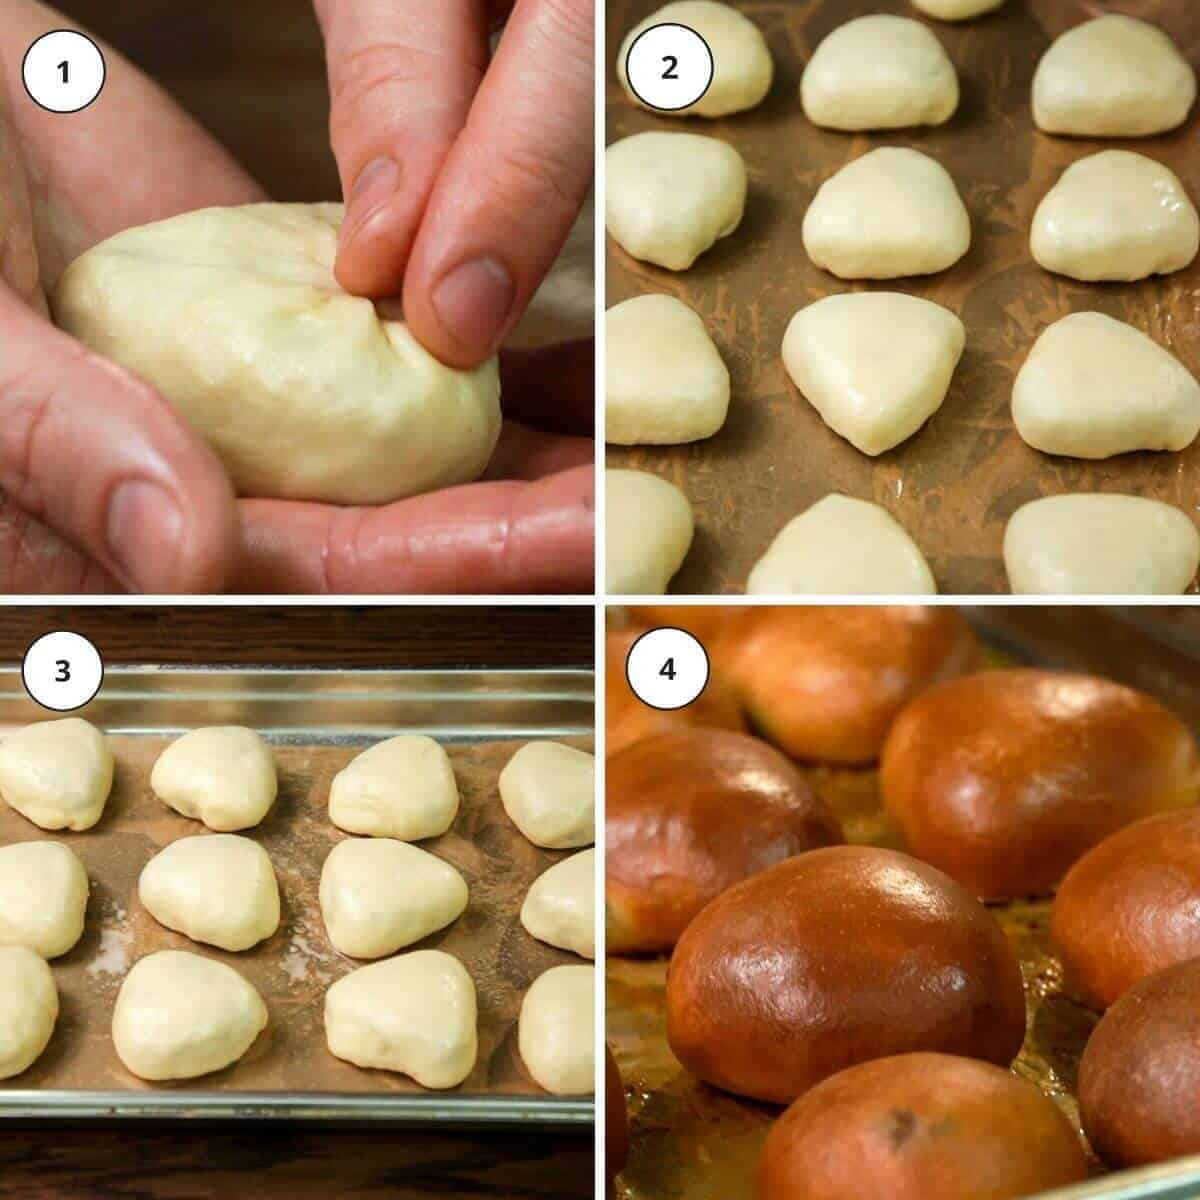 Picture-steps-for-making-meat-piroshki.